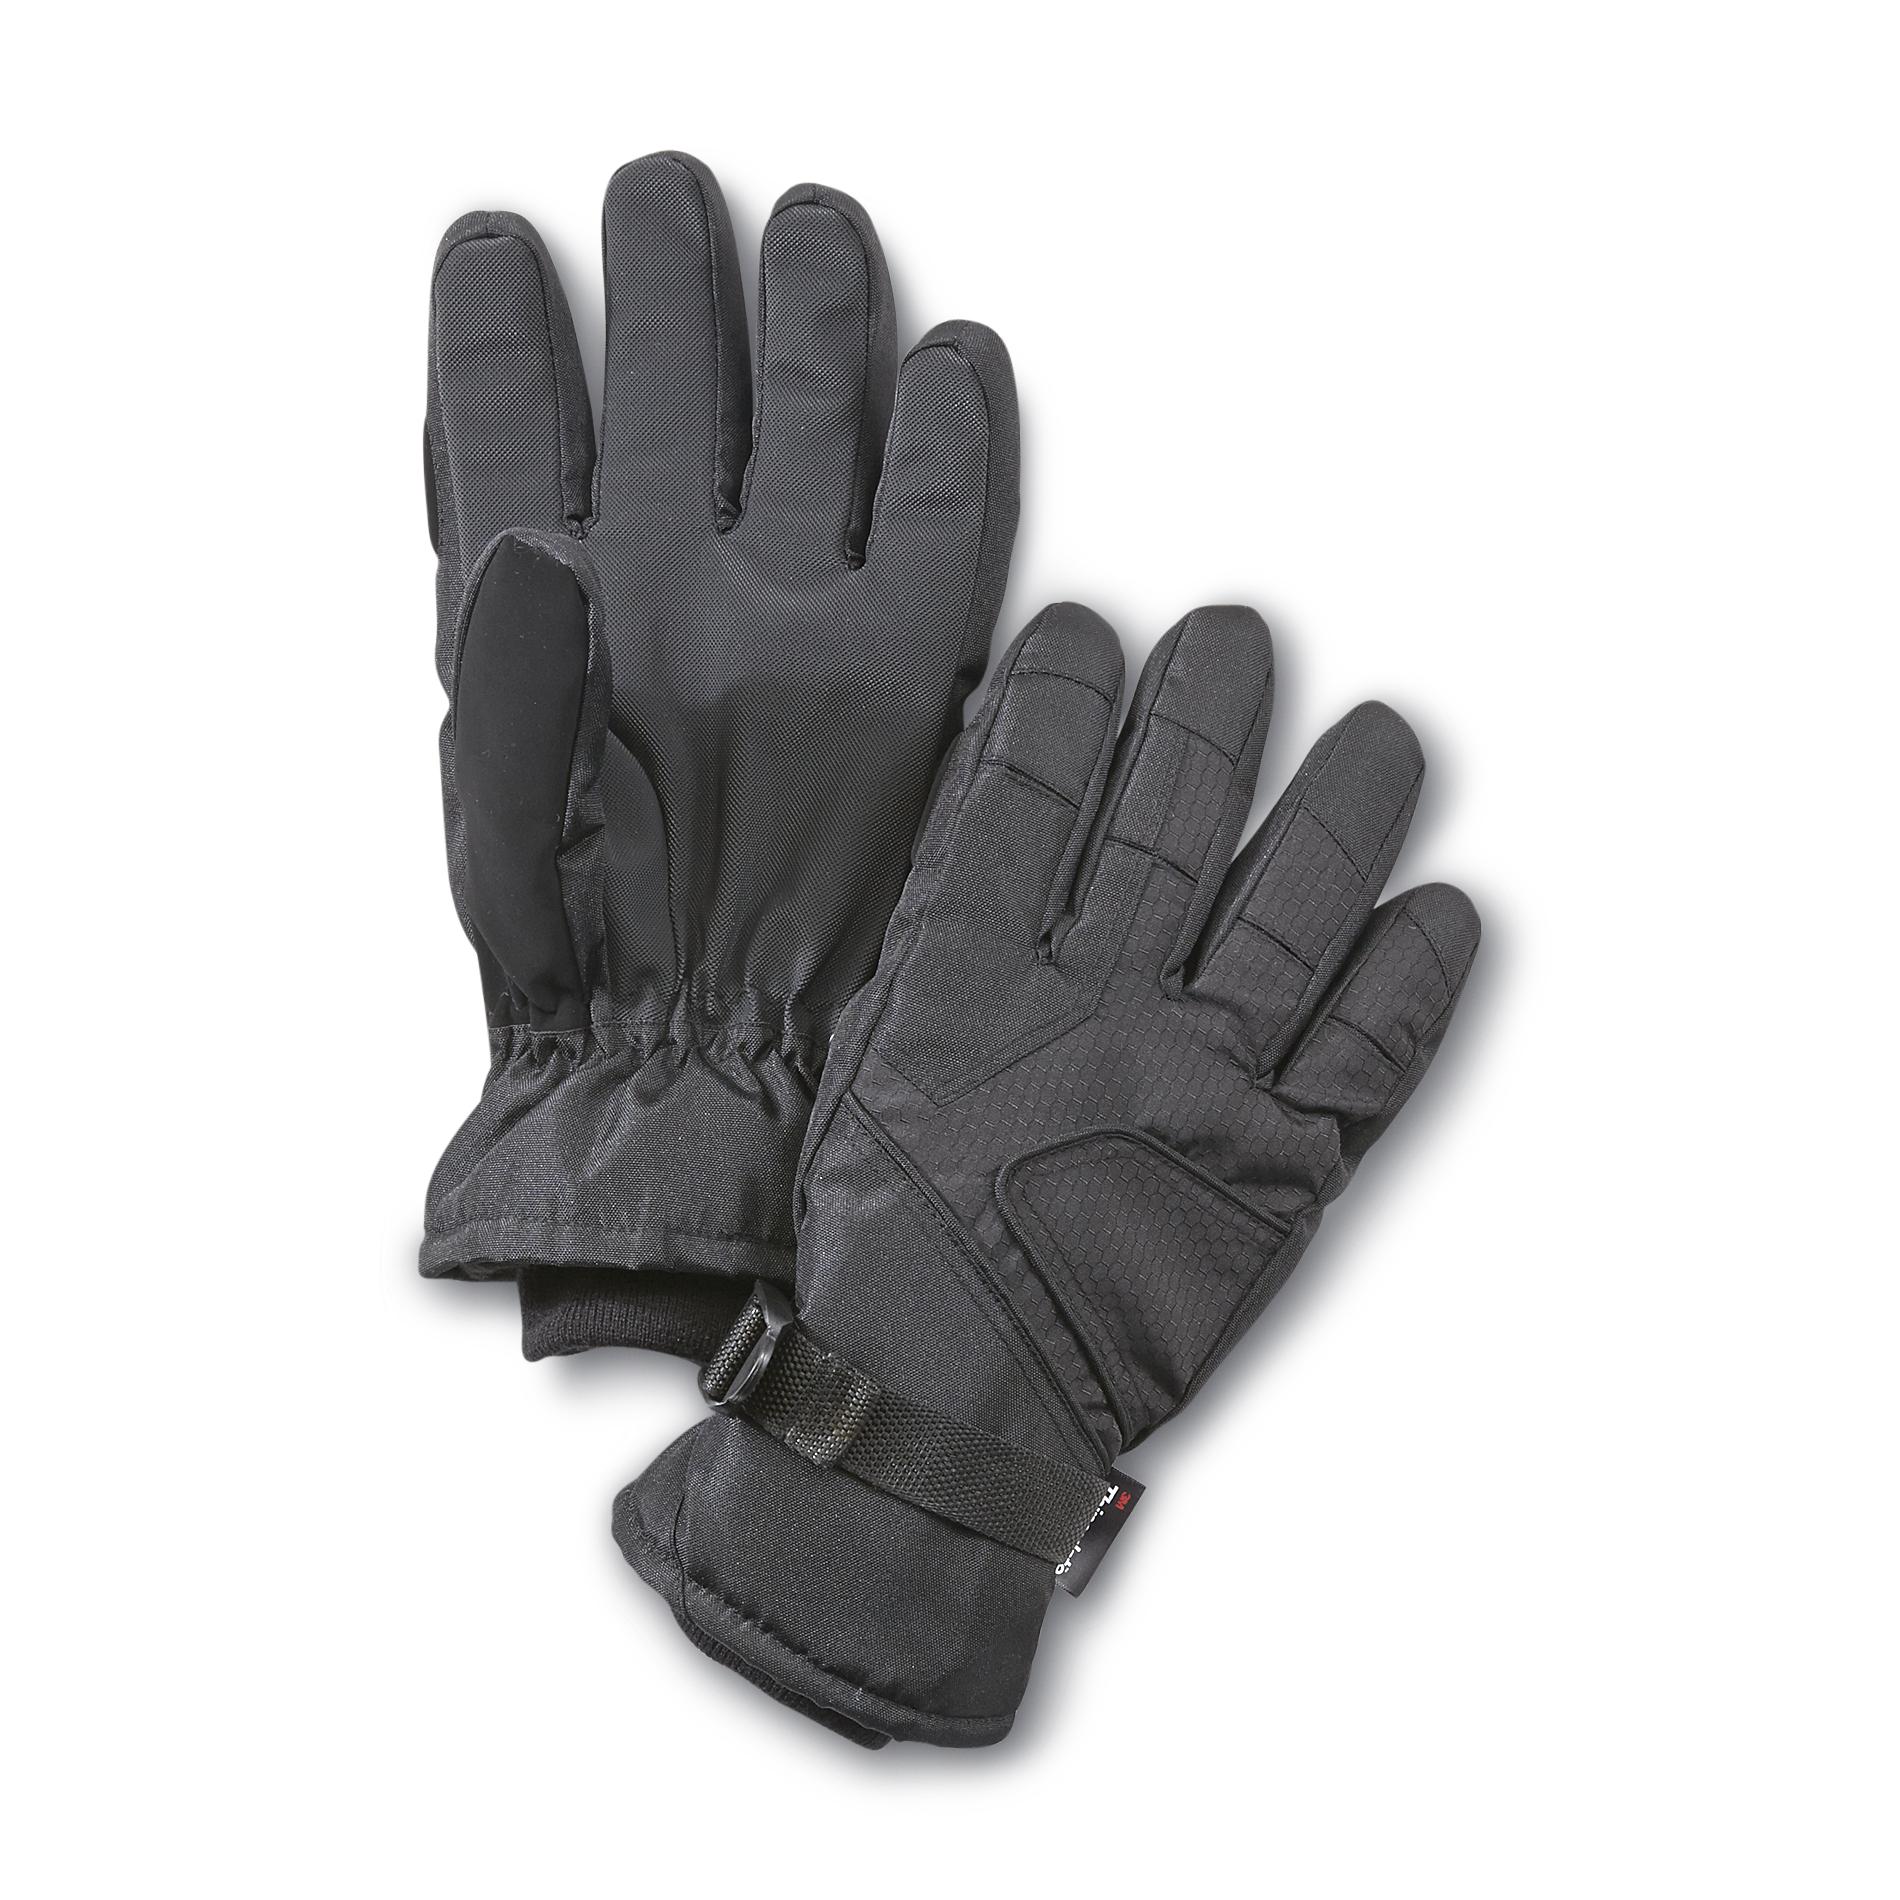 Athletech Men's Ski Gloves - Honeycomb